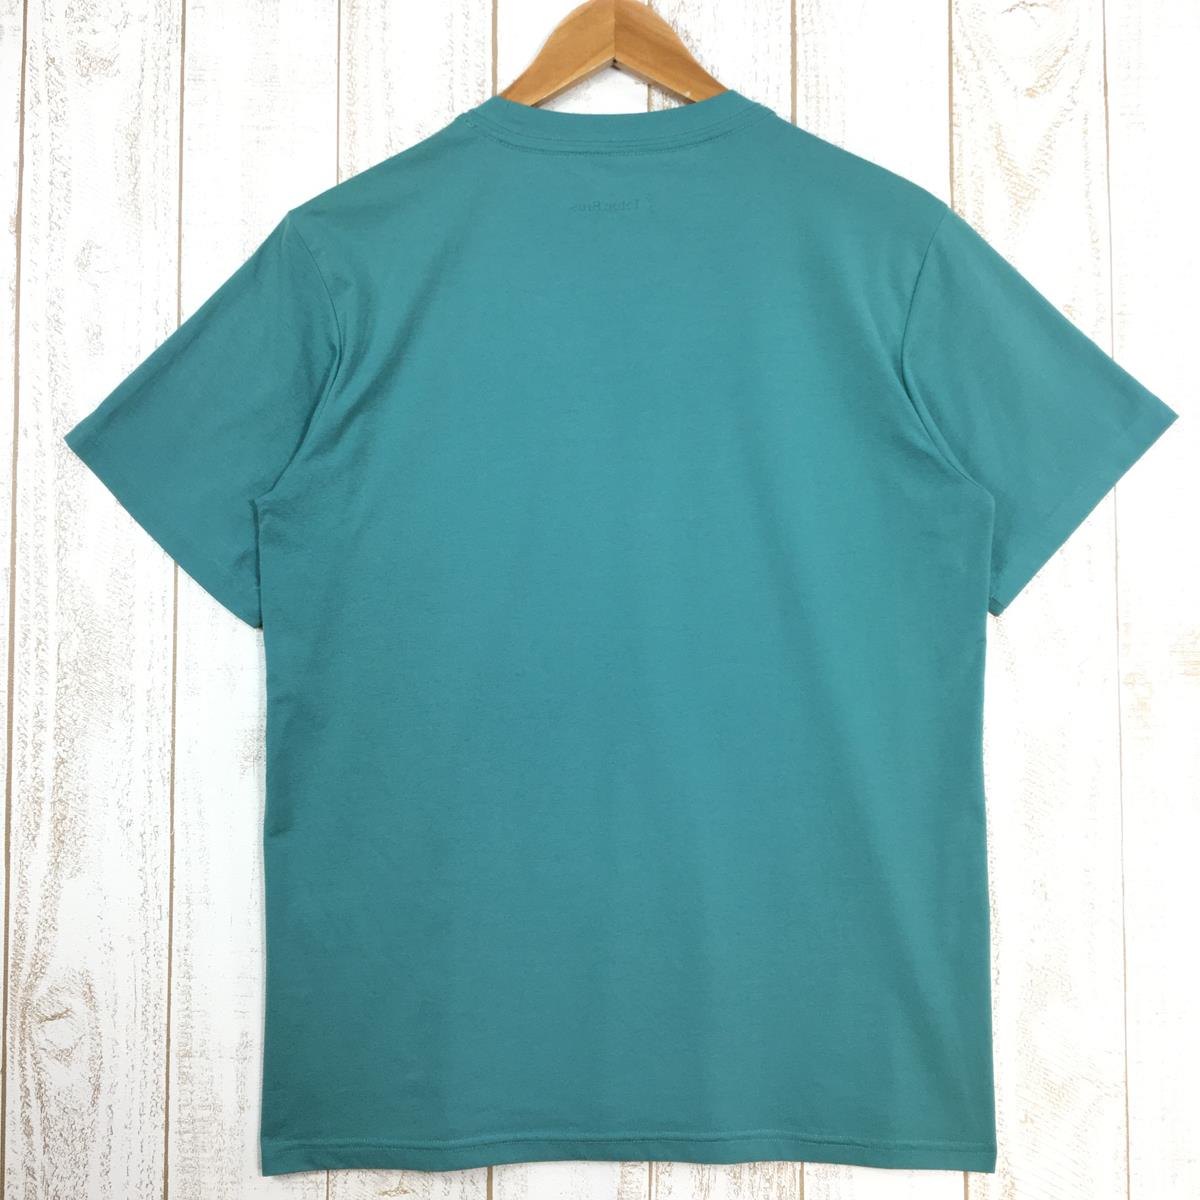 【MEN's M】 ティートンブロス ヴェイパー ポケット Tシャツ Vapor Pocket Tee ベイパー Tシャツ TETON BROS TB201-29M グリーン系